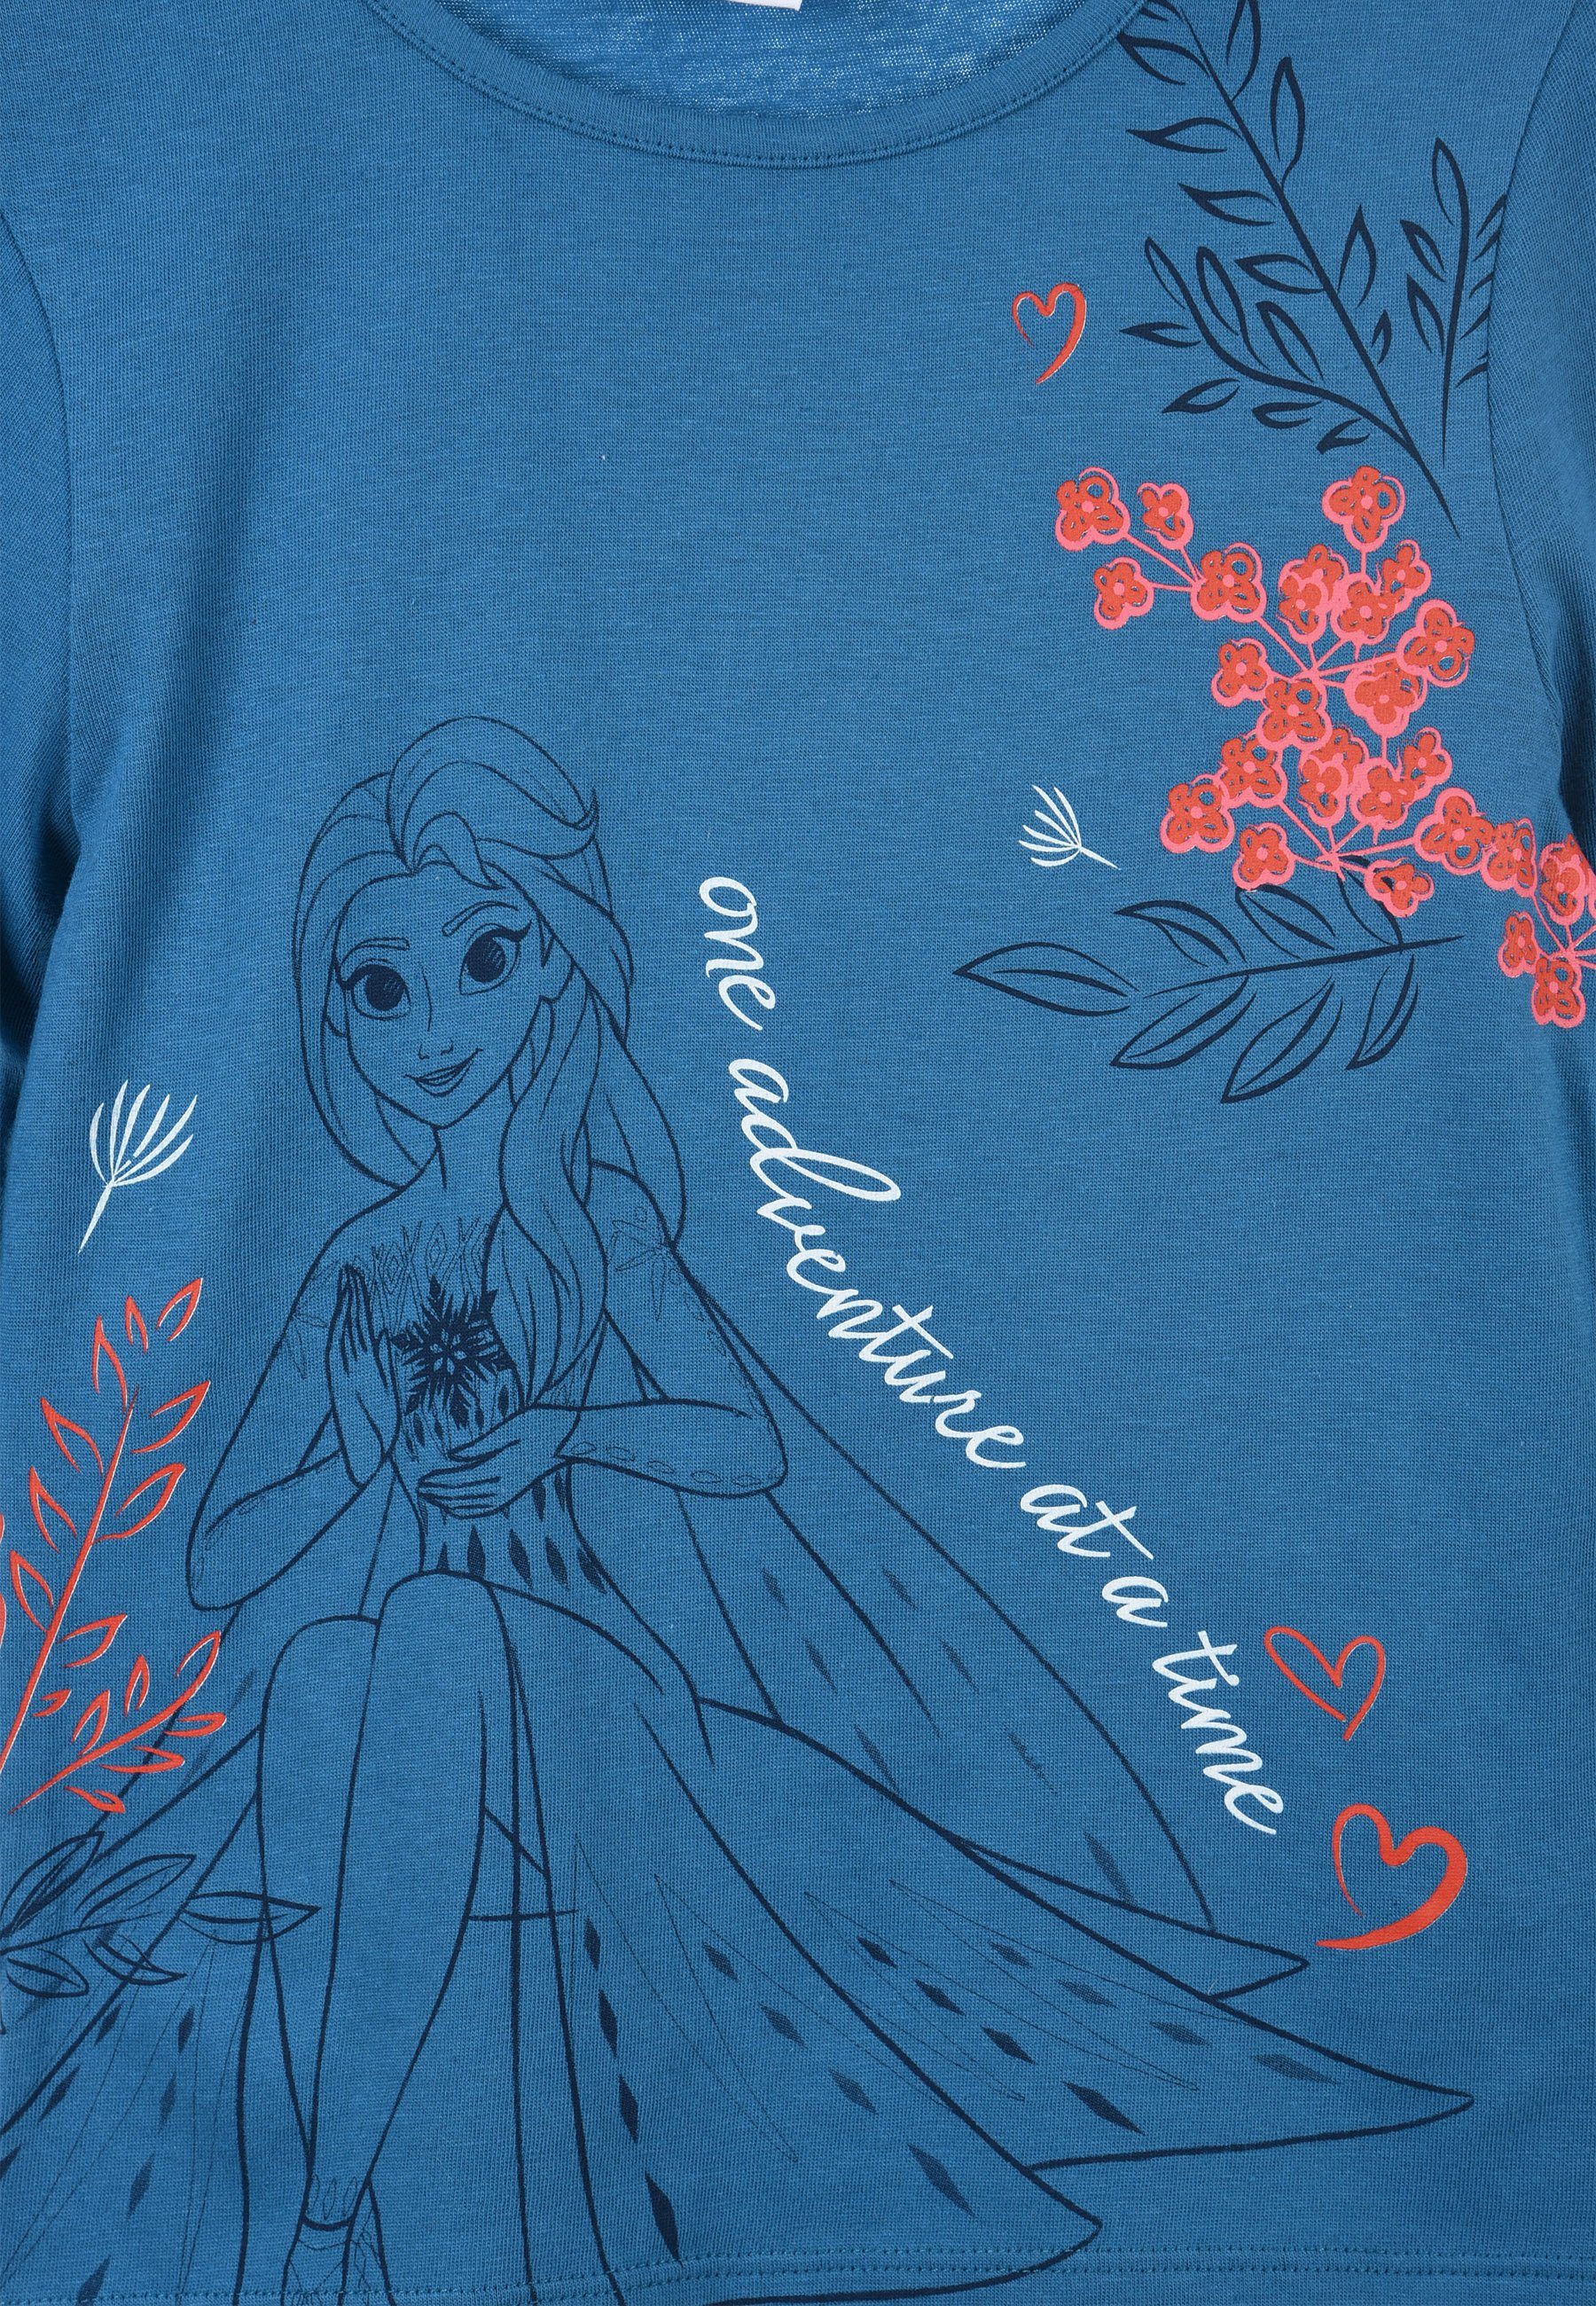 Disney Frozen Langarmshirt Die Eiskönigin Anna Longsleeve T-Shirt und Elsa Langarmshirt Mädchen Blau